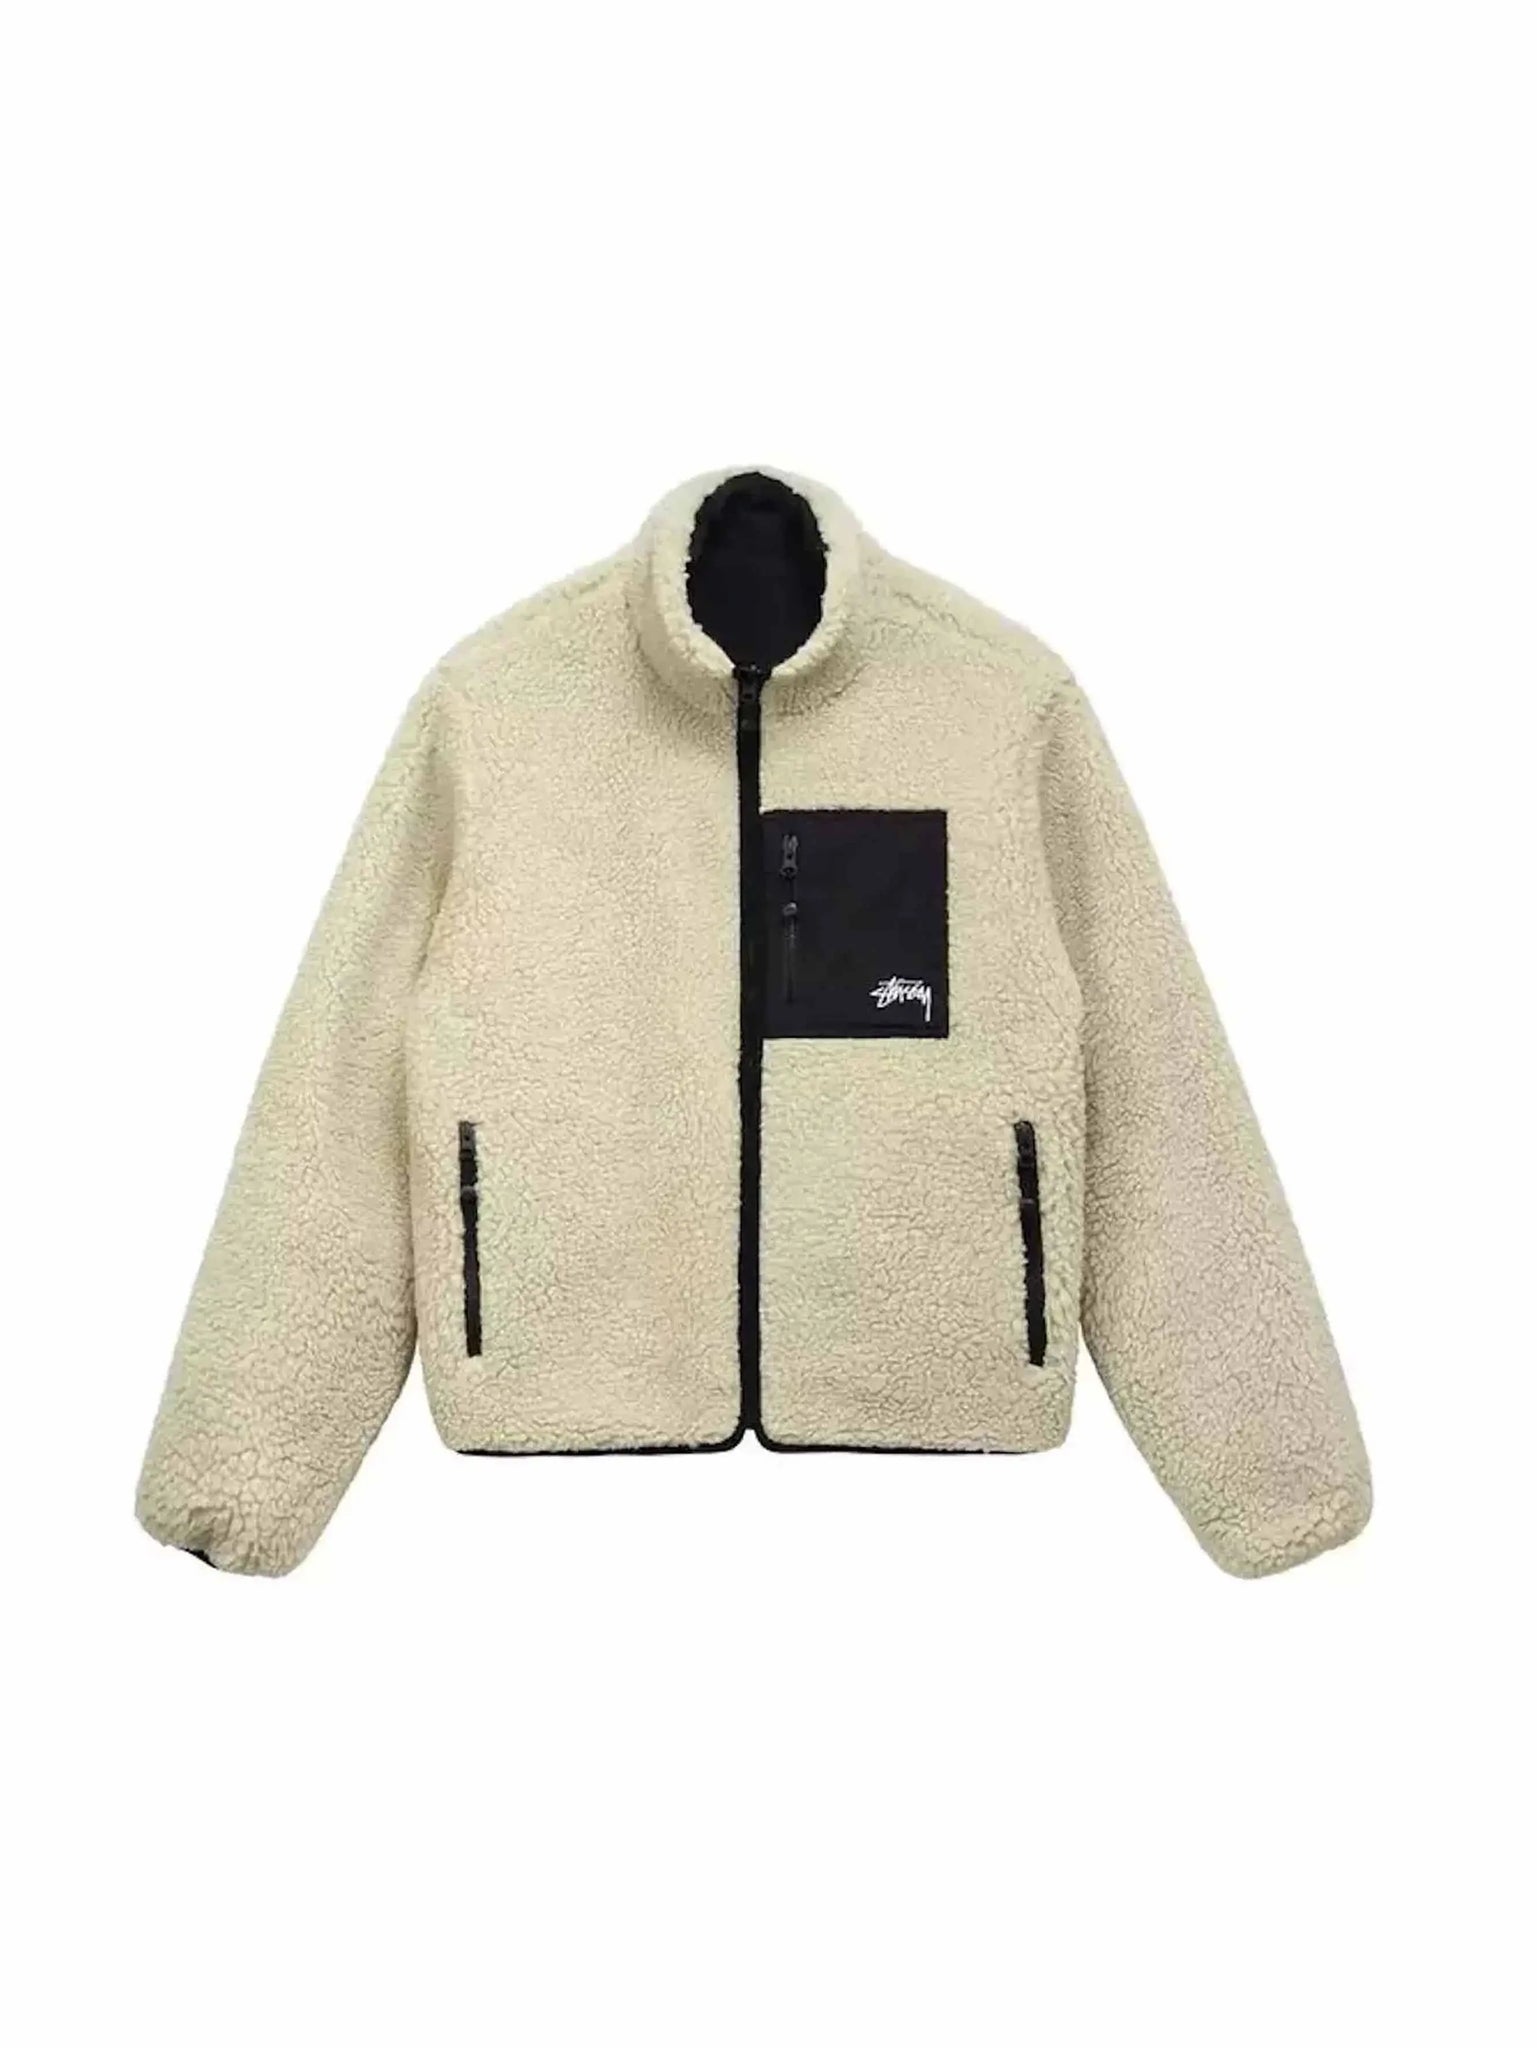 Stussy 8 Ball Sherpa Fleece Reversible Jacket Cream - Prior